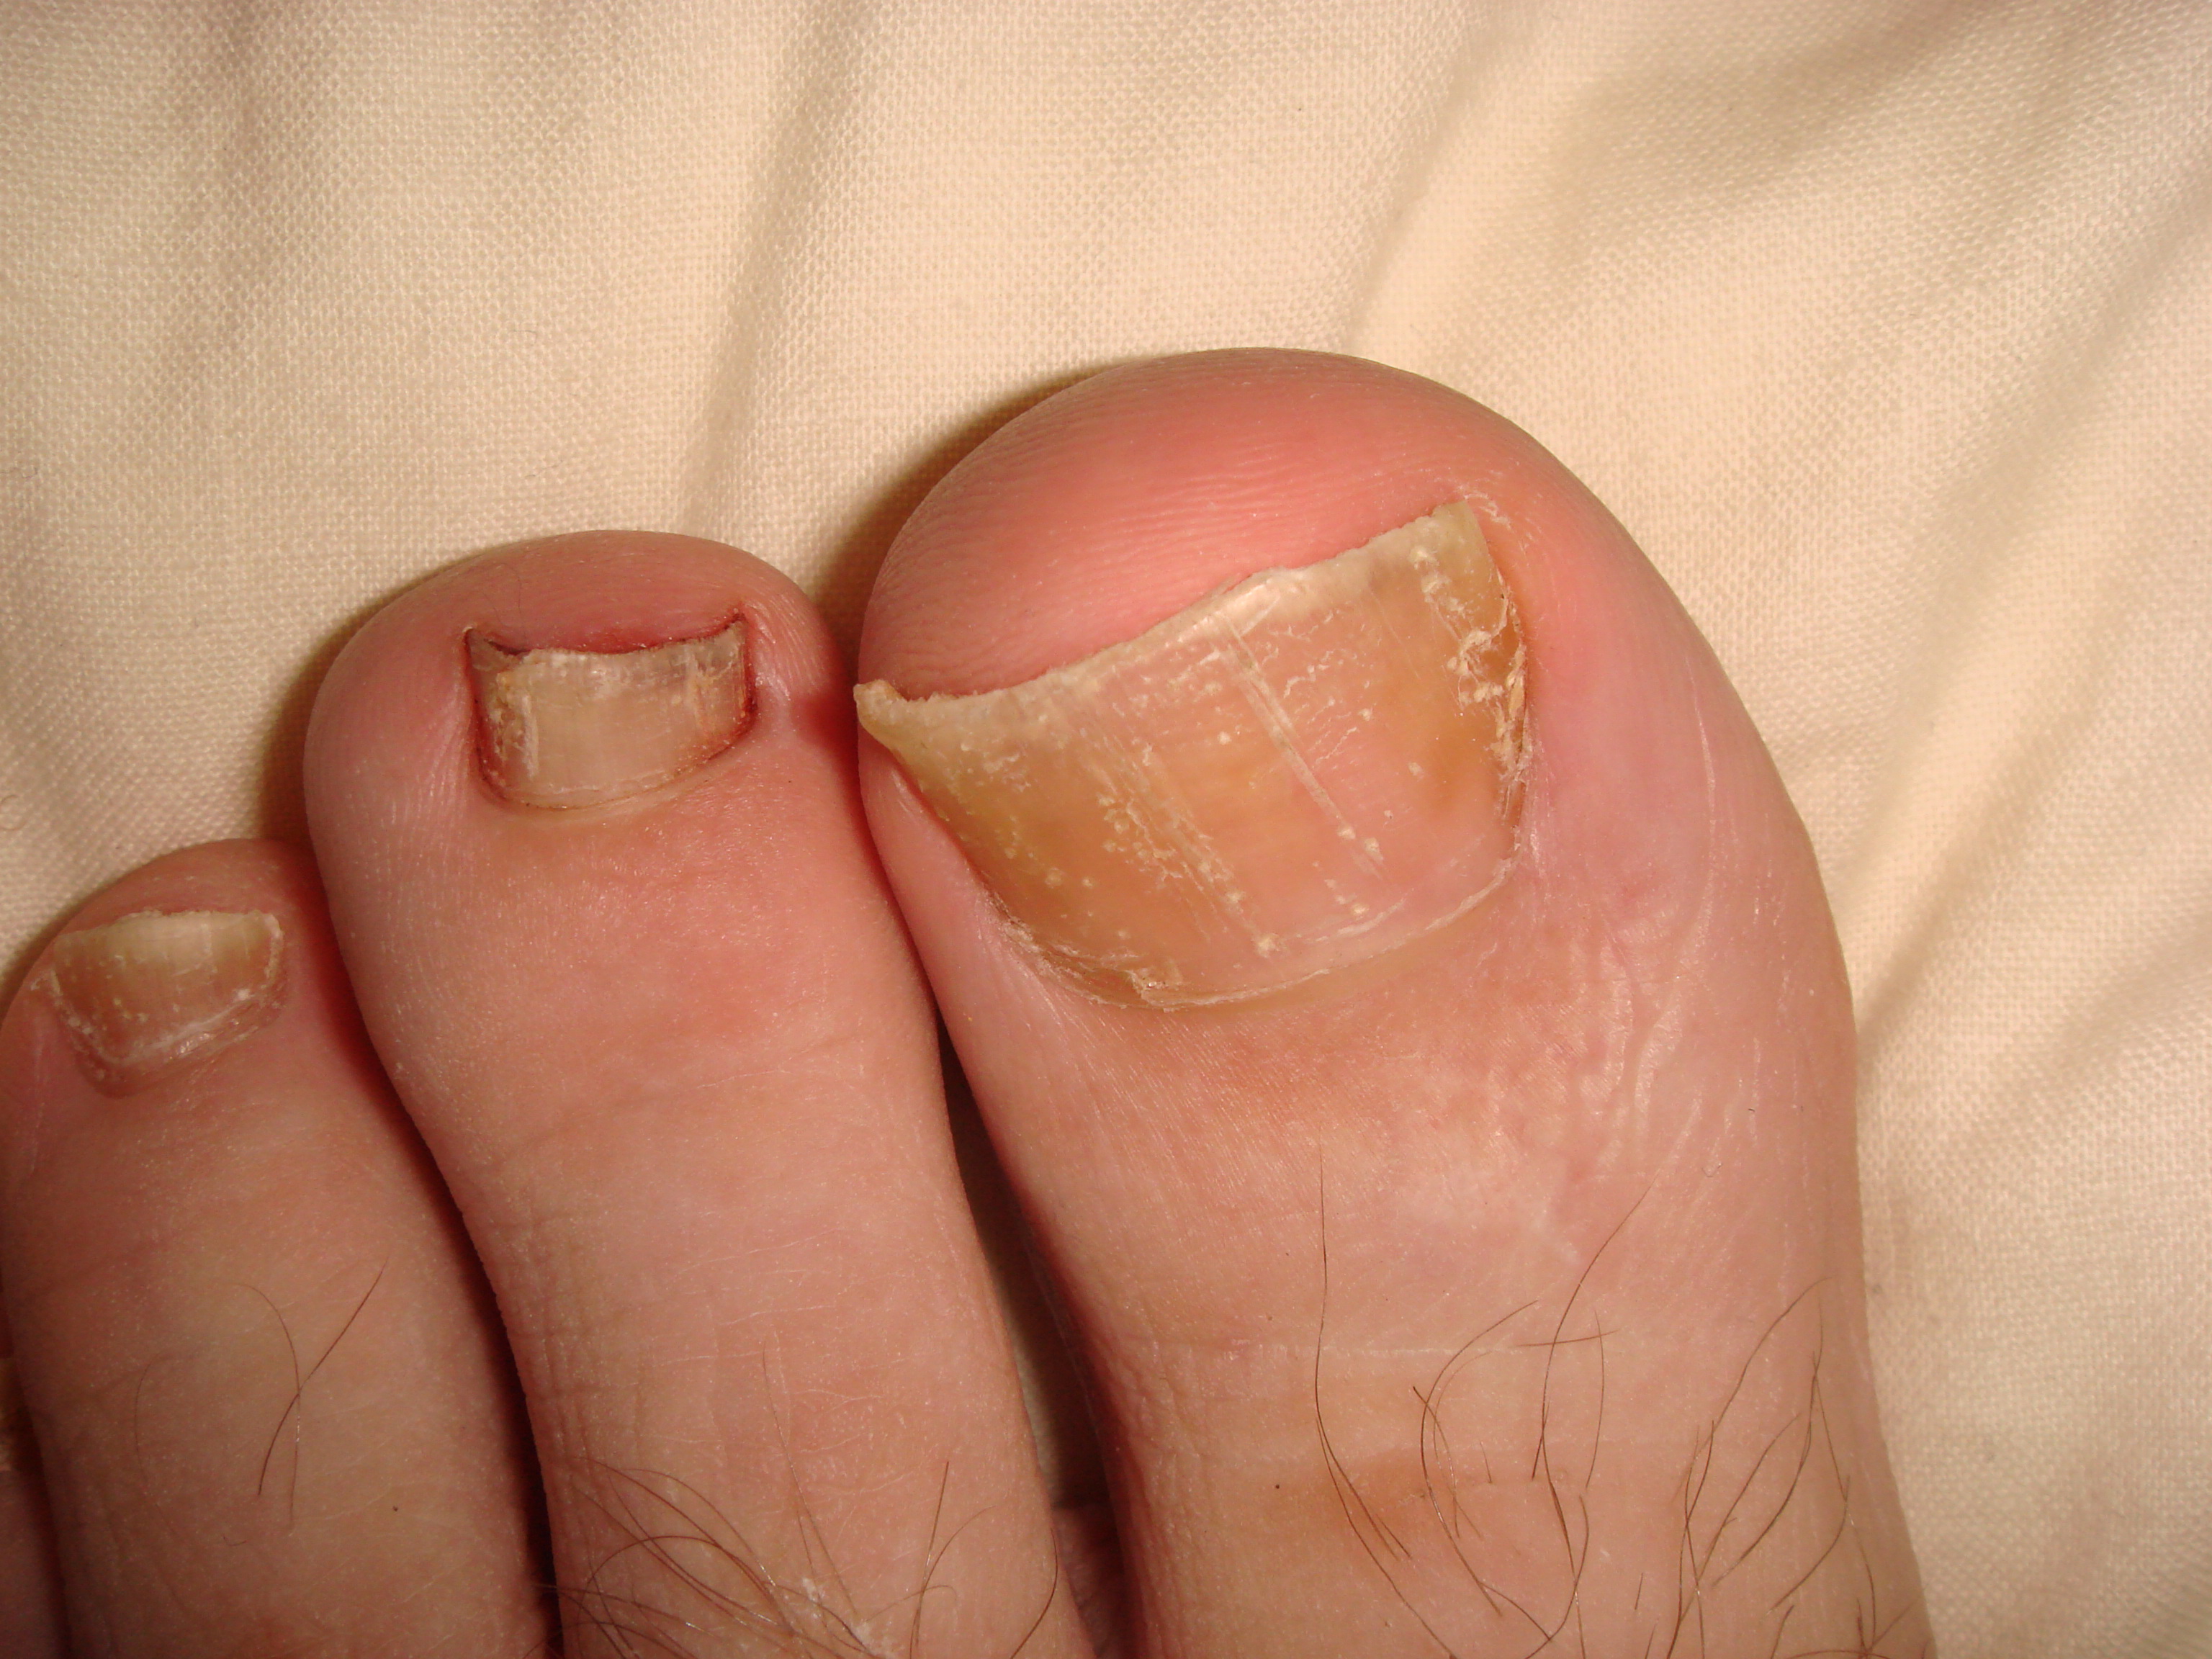 psoriasis on toenails